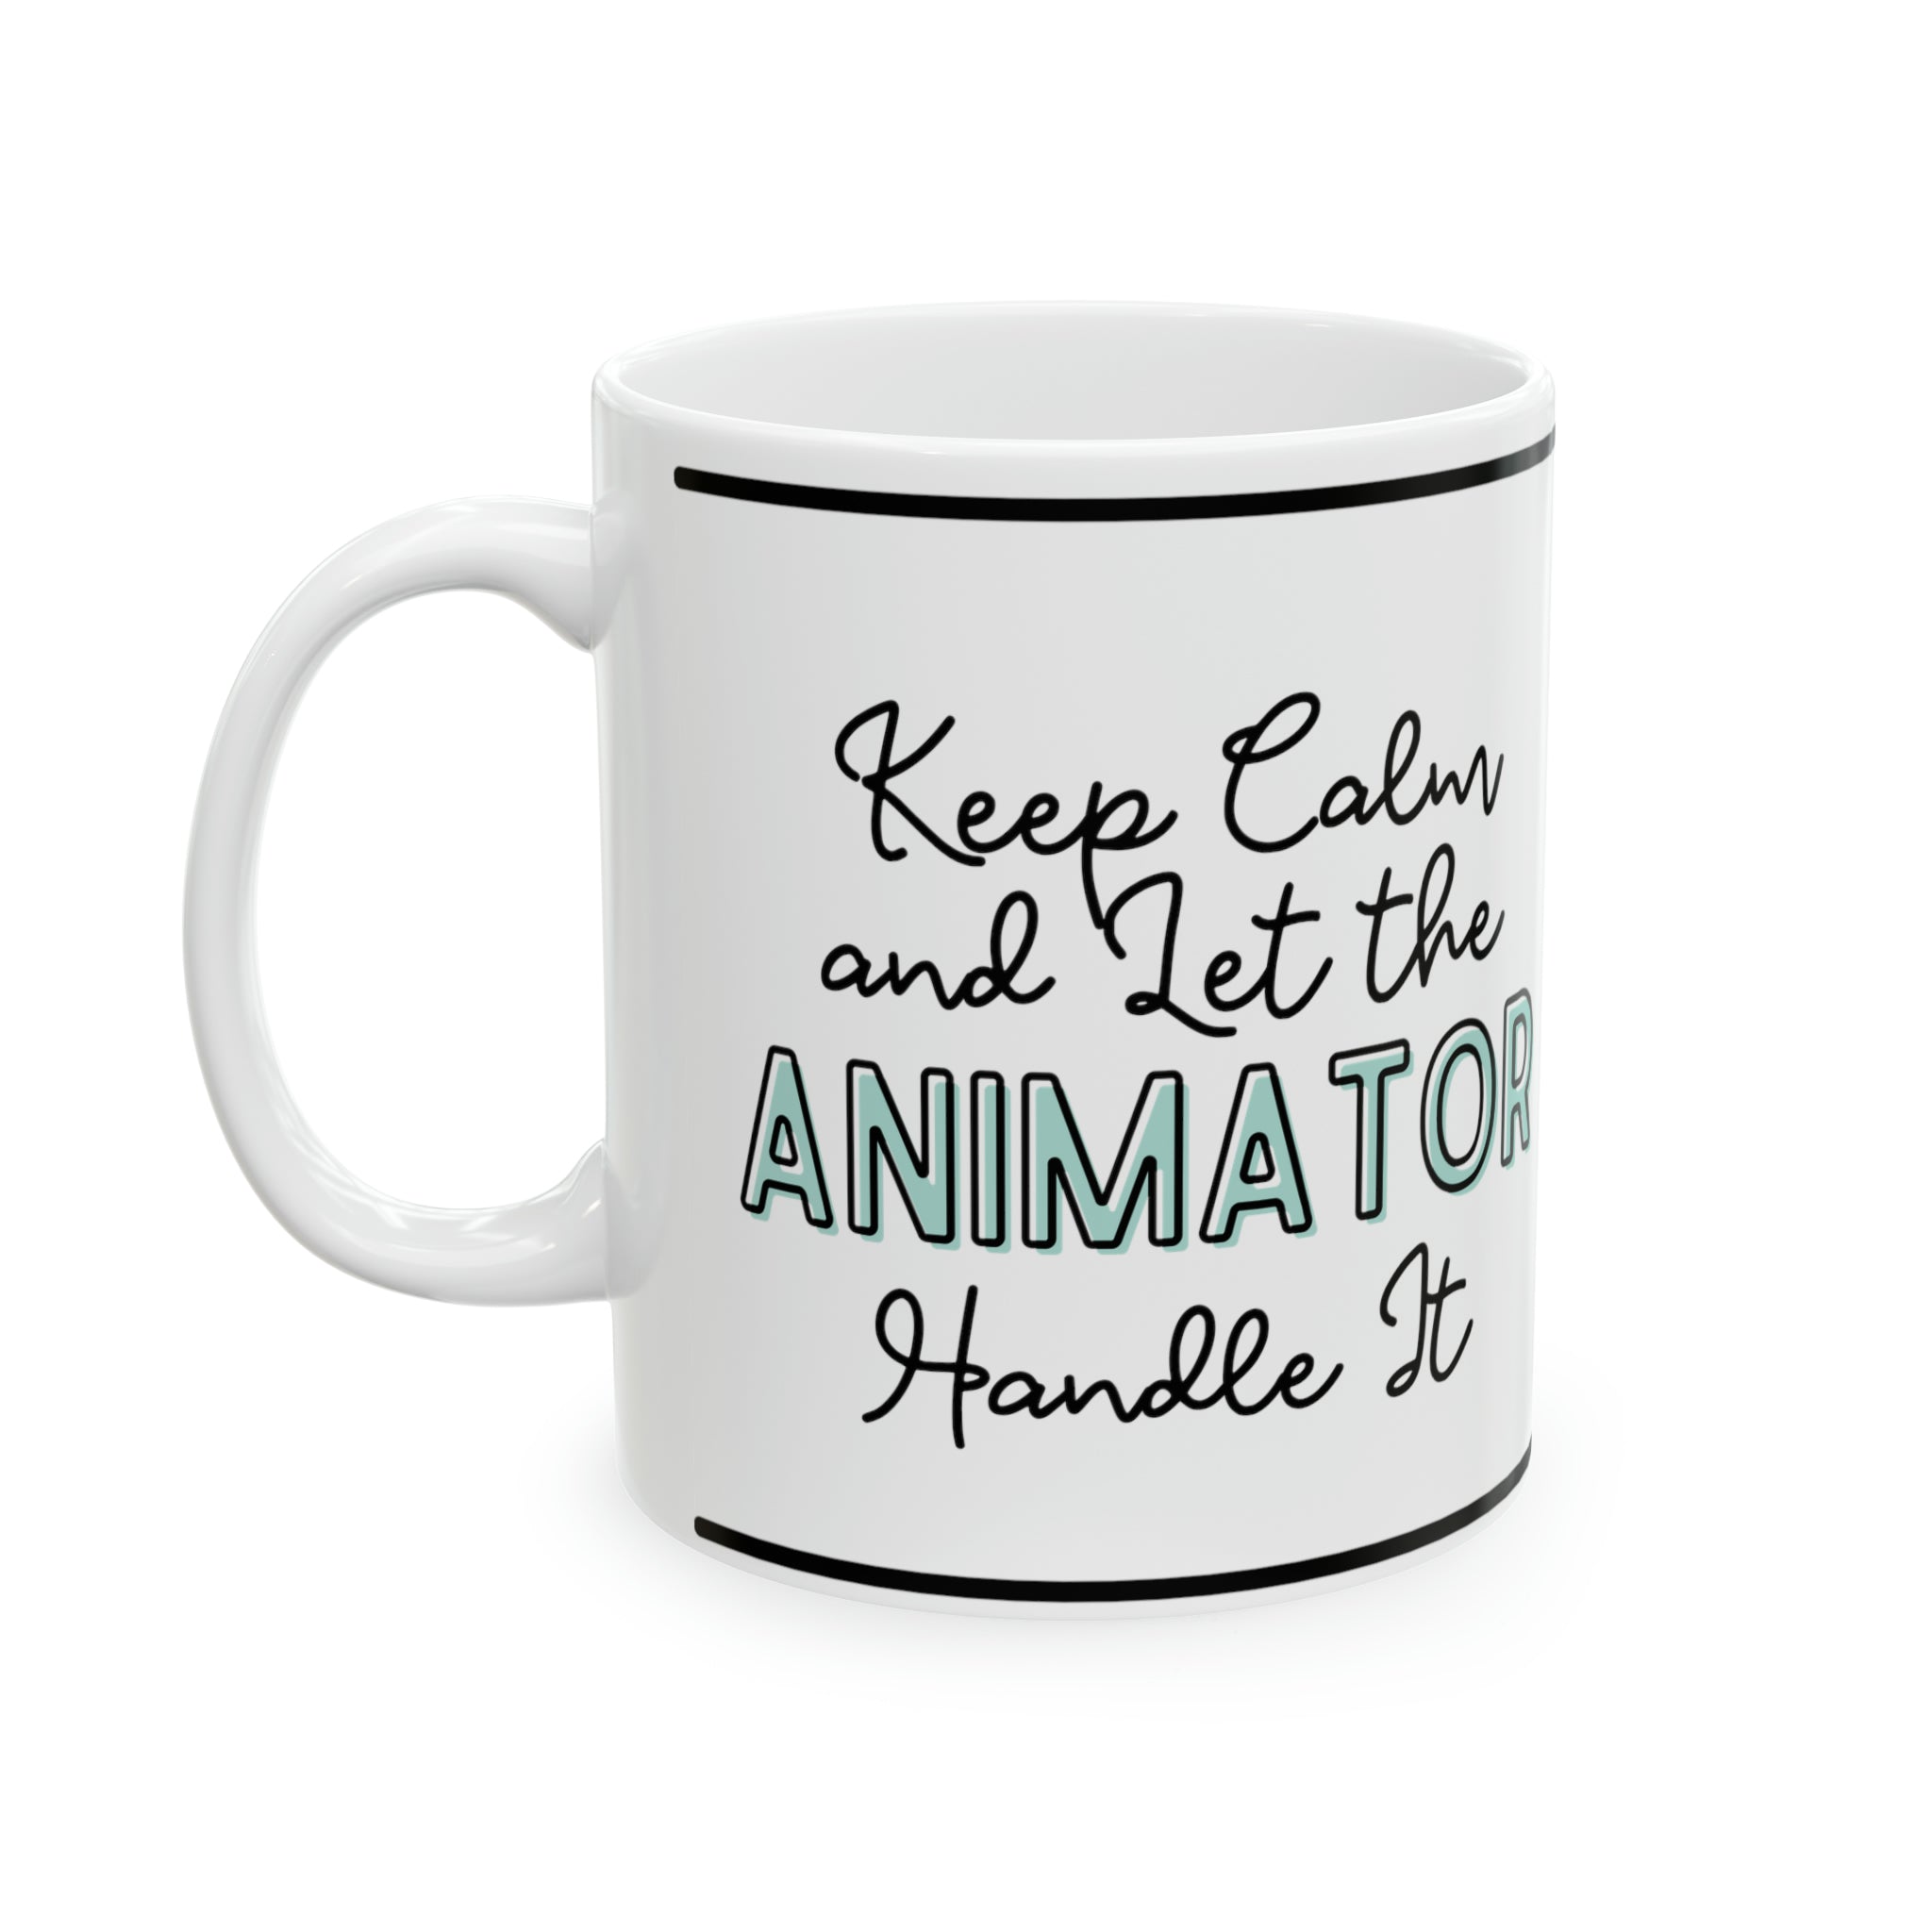 Keep Calm and let the Animator Handle It - Ceramic Mug, 11oz